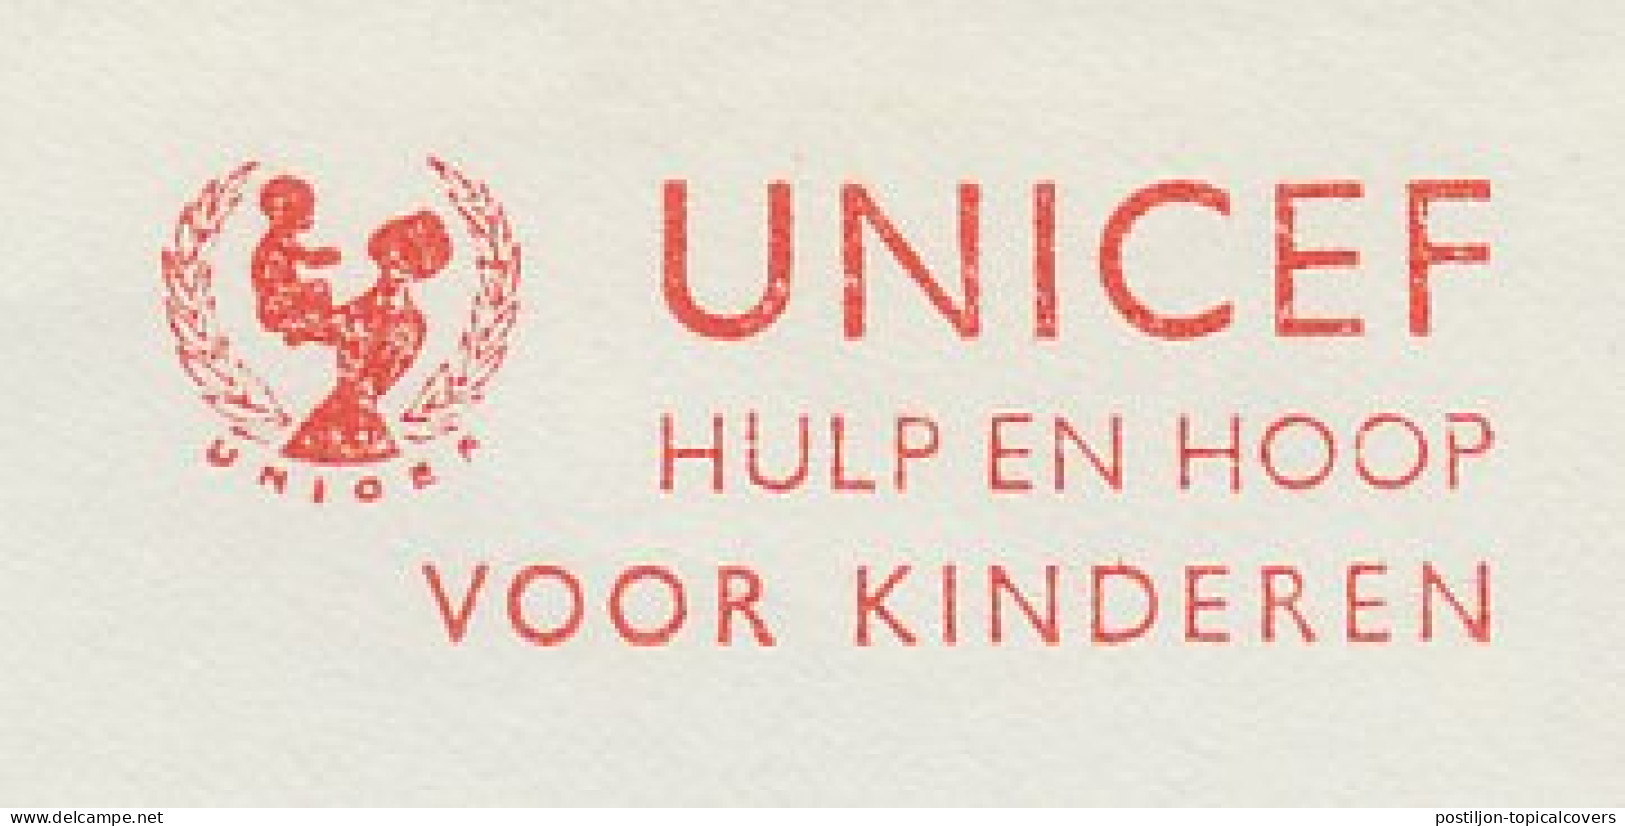 Meter Cut Netherlands 1964 UNICEF - UNO